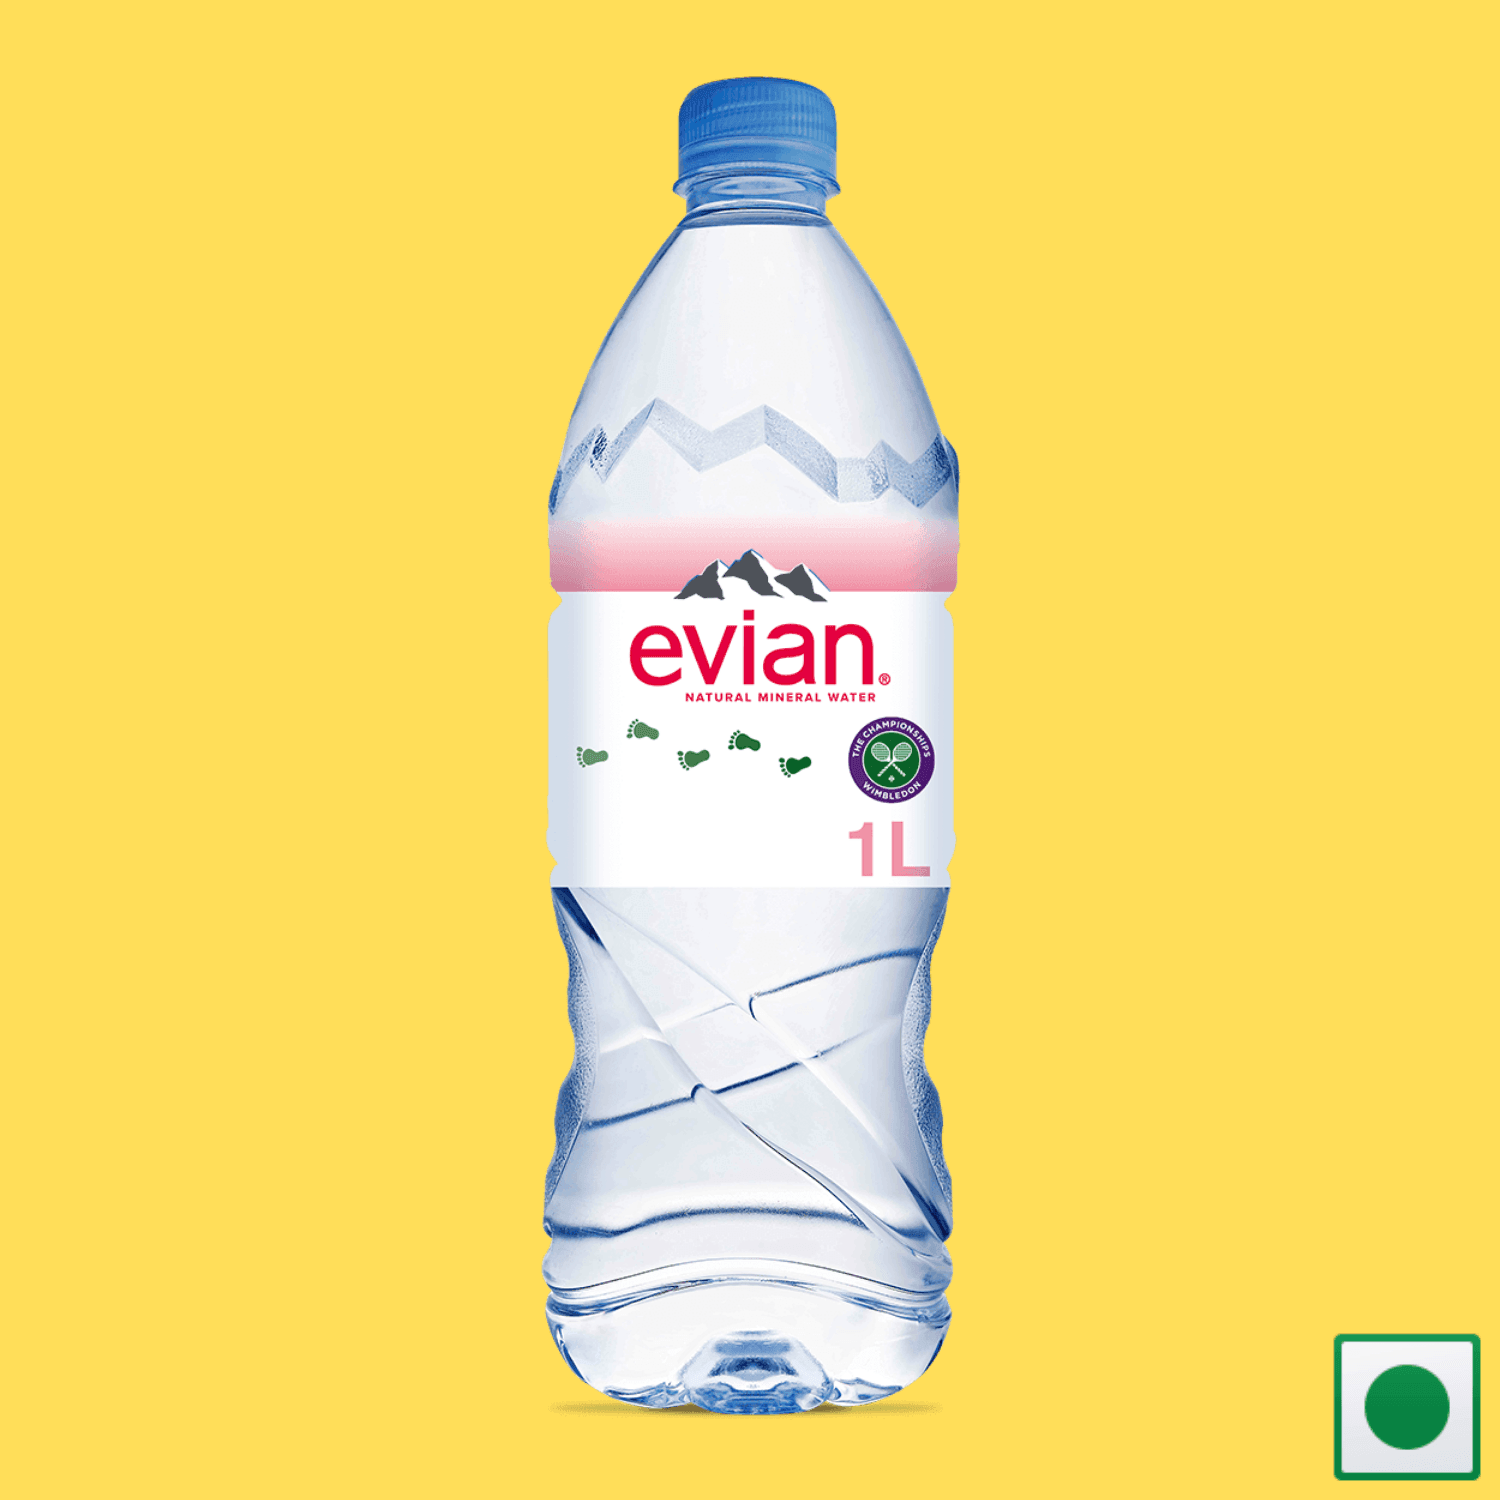 Evian Natural Mineral Water, 1L (Imported) - Super 7 Mart